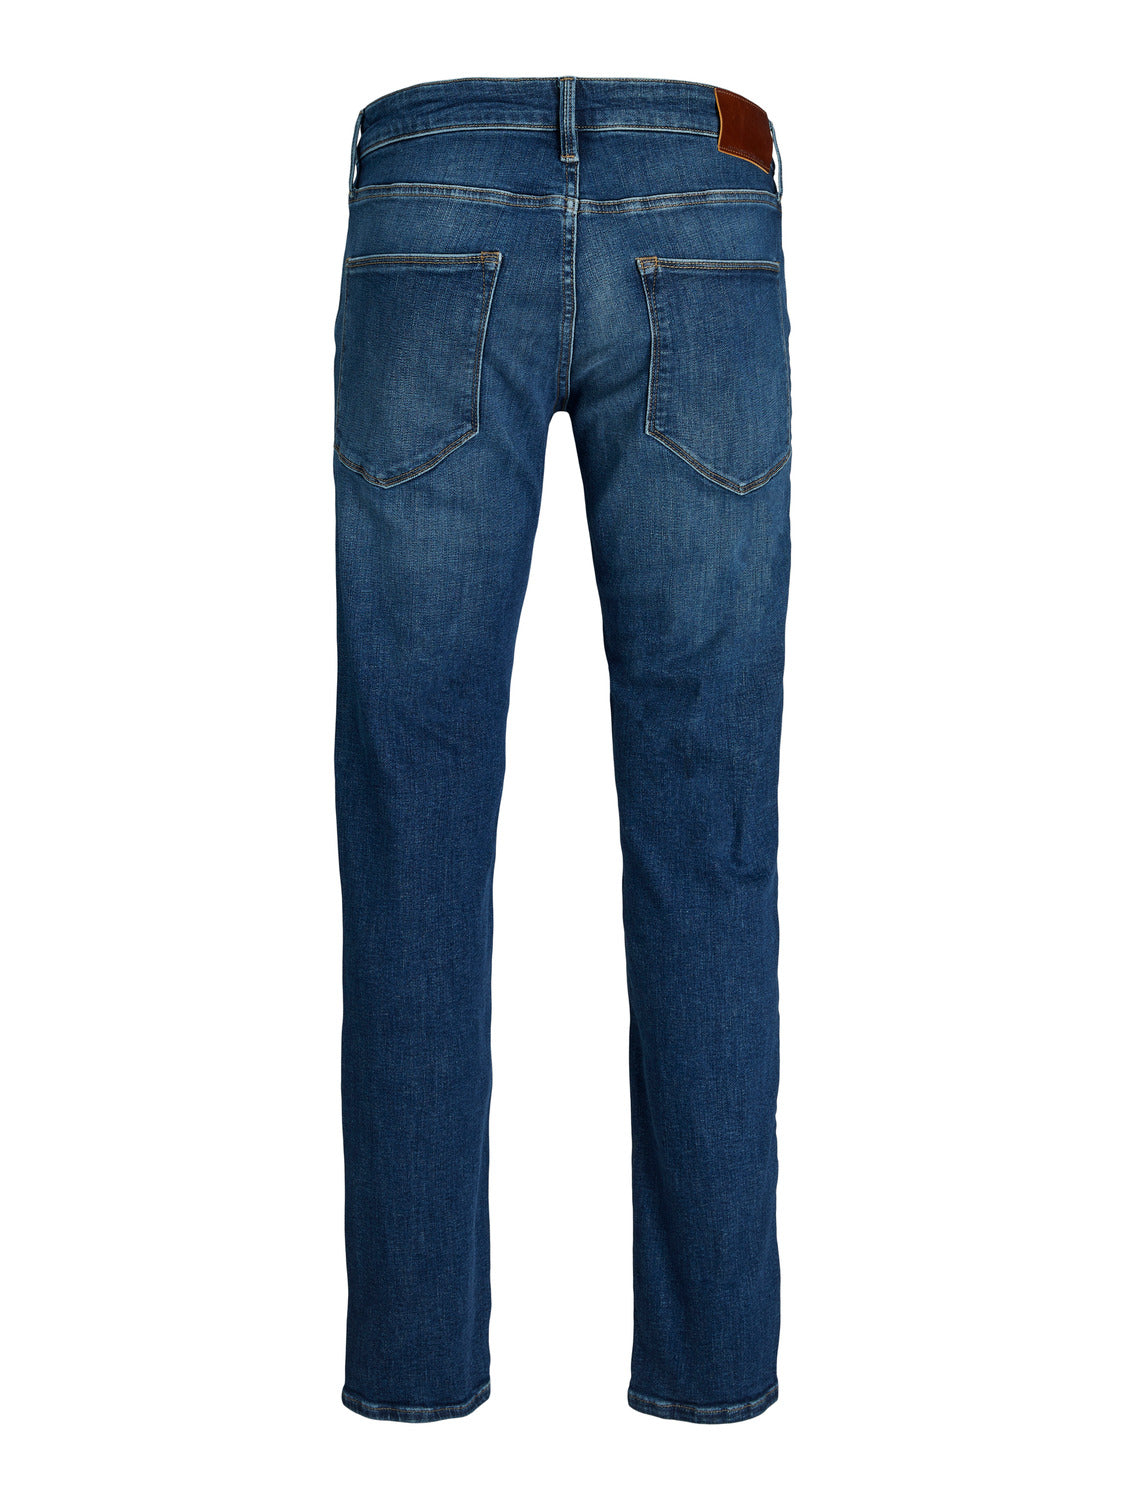 JJICLARK Jeans - Blue Denim